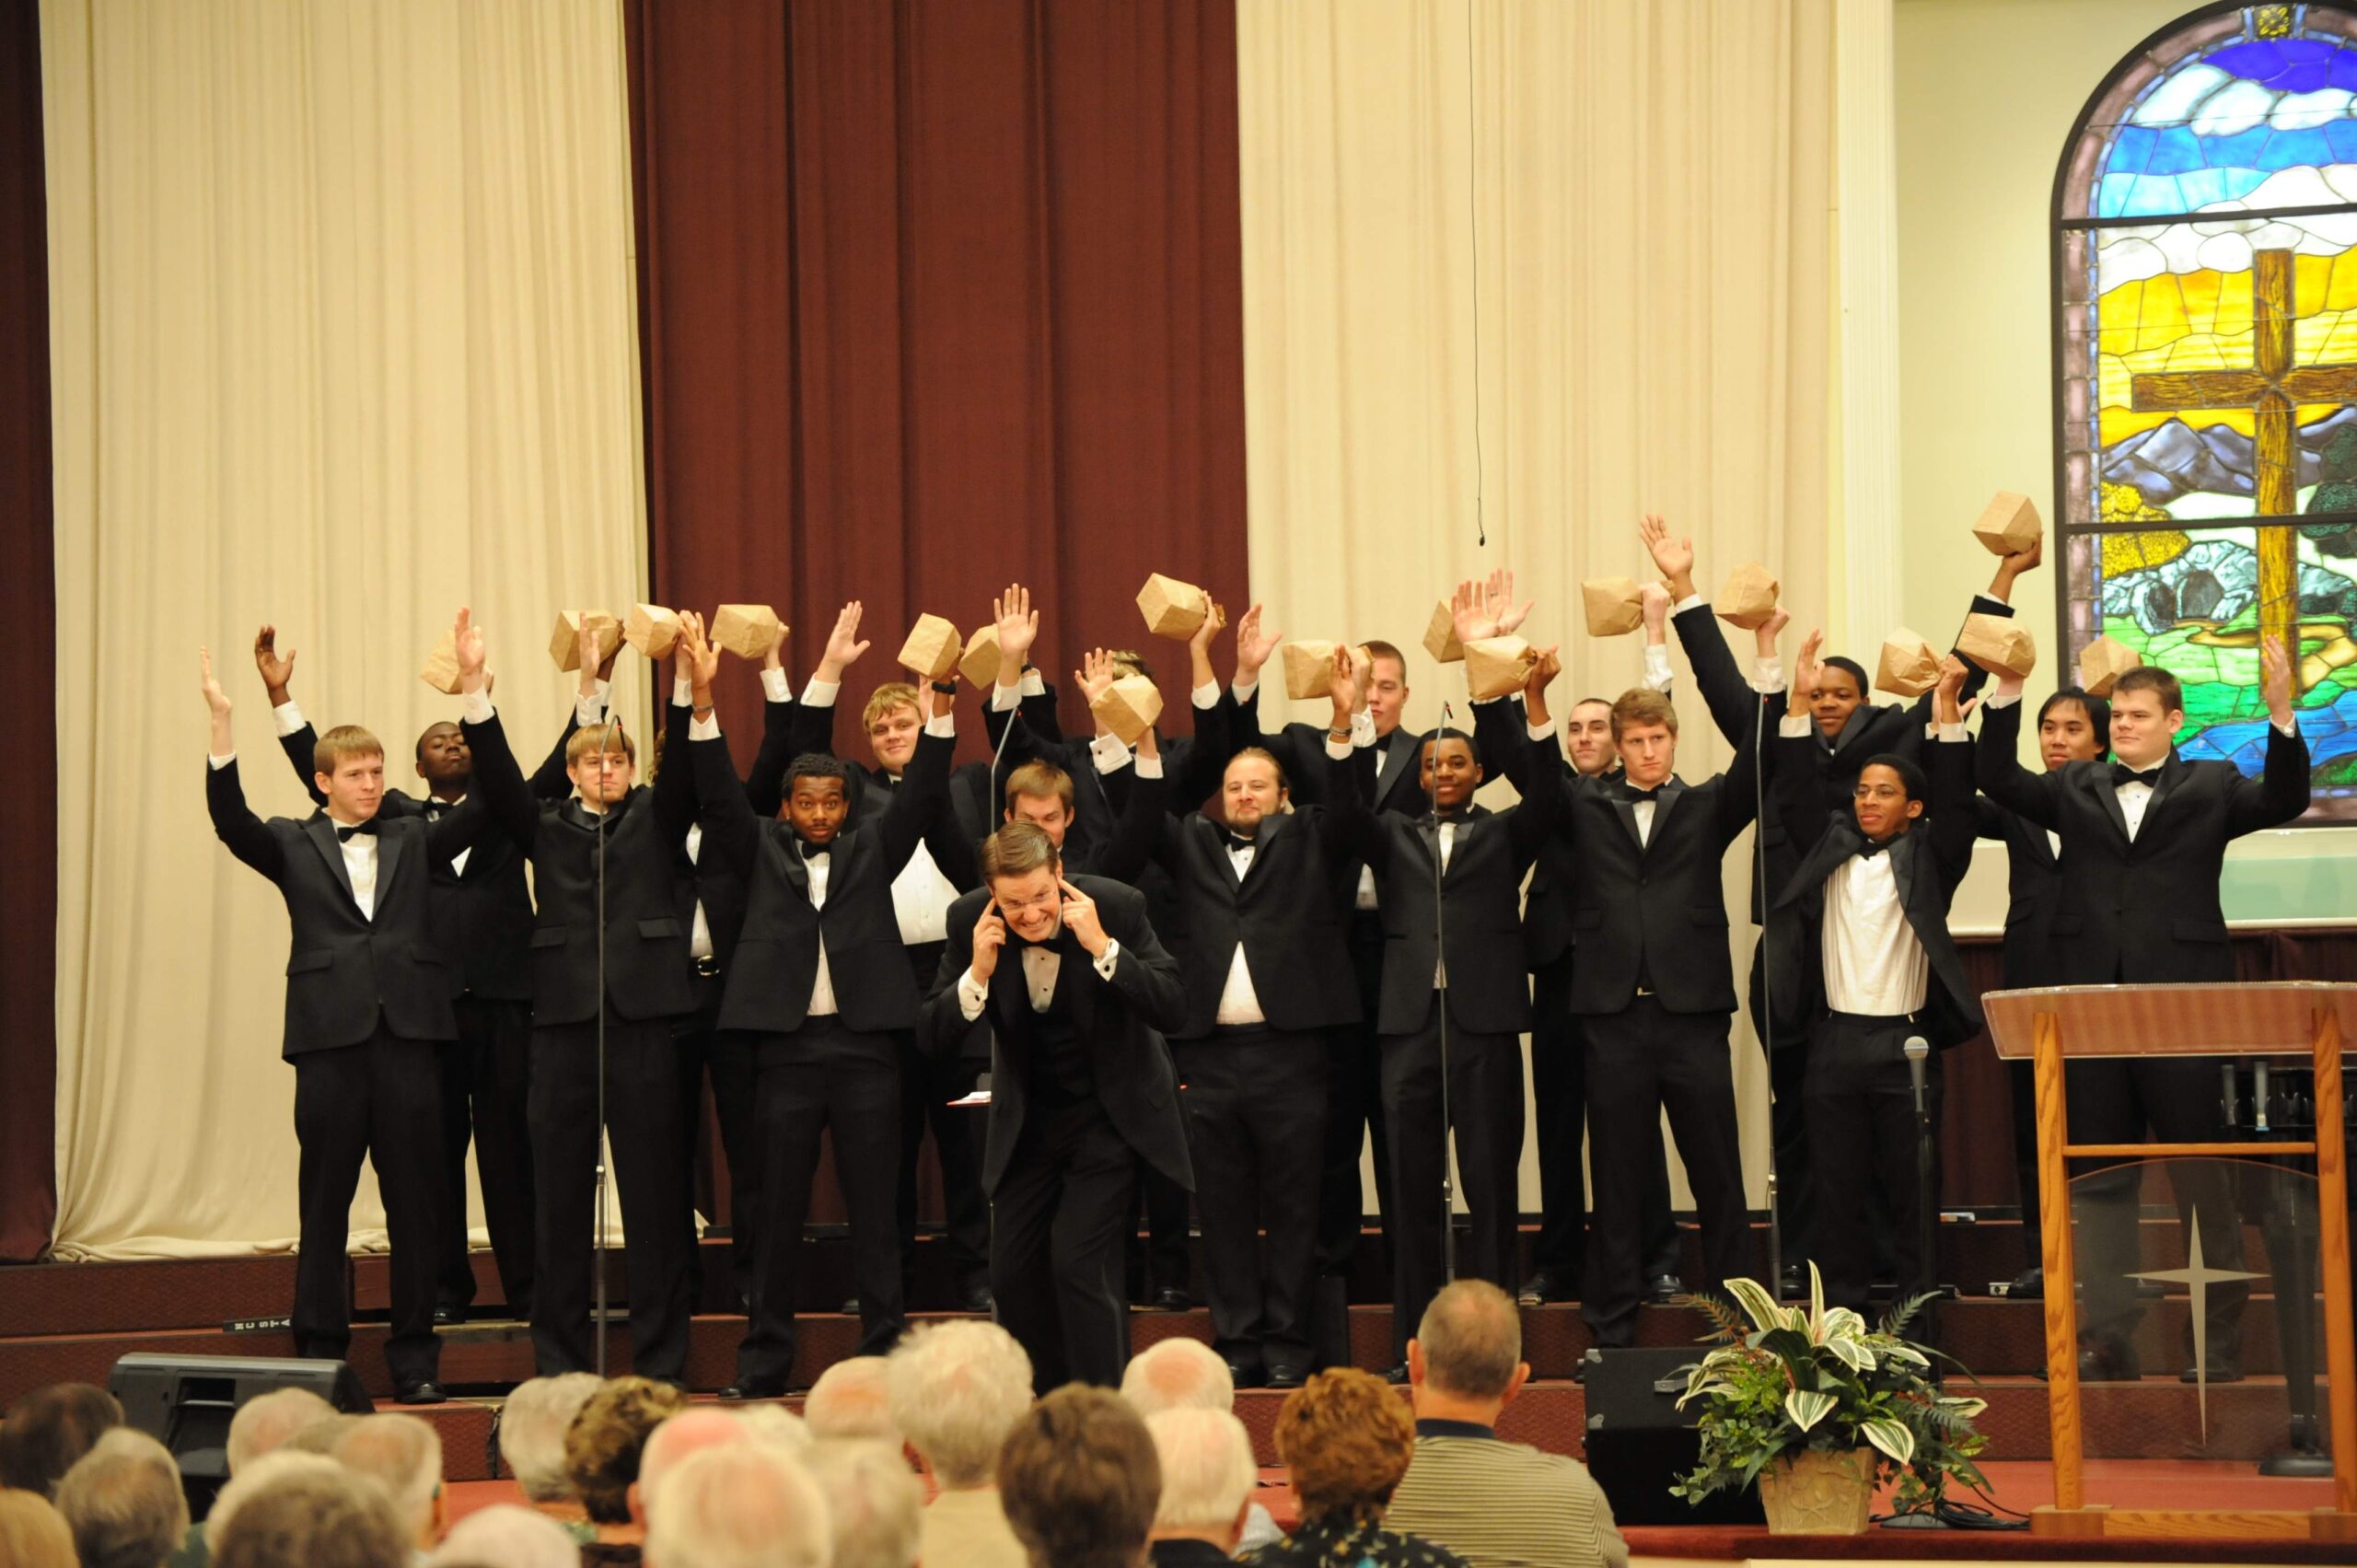 Singing Statesmen performing in North Raleigh